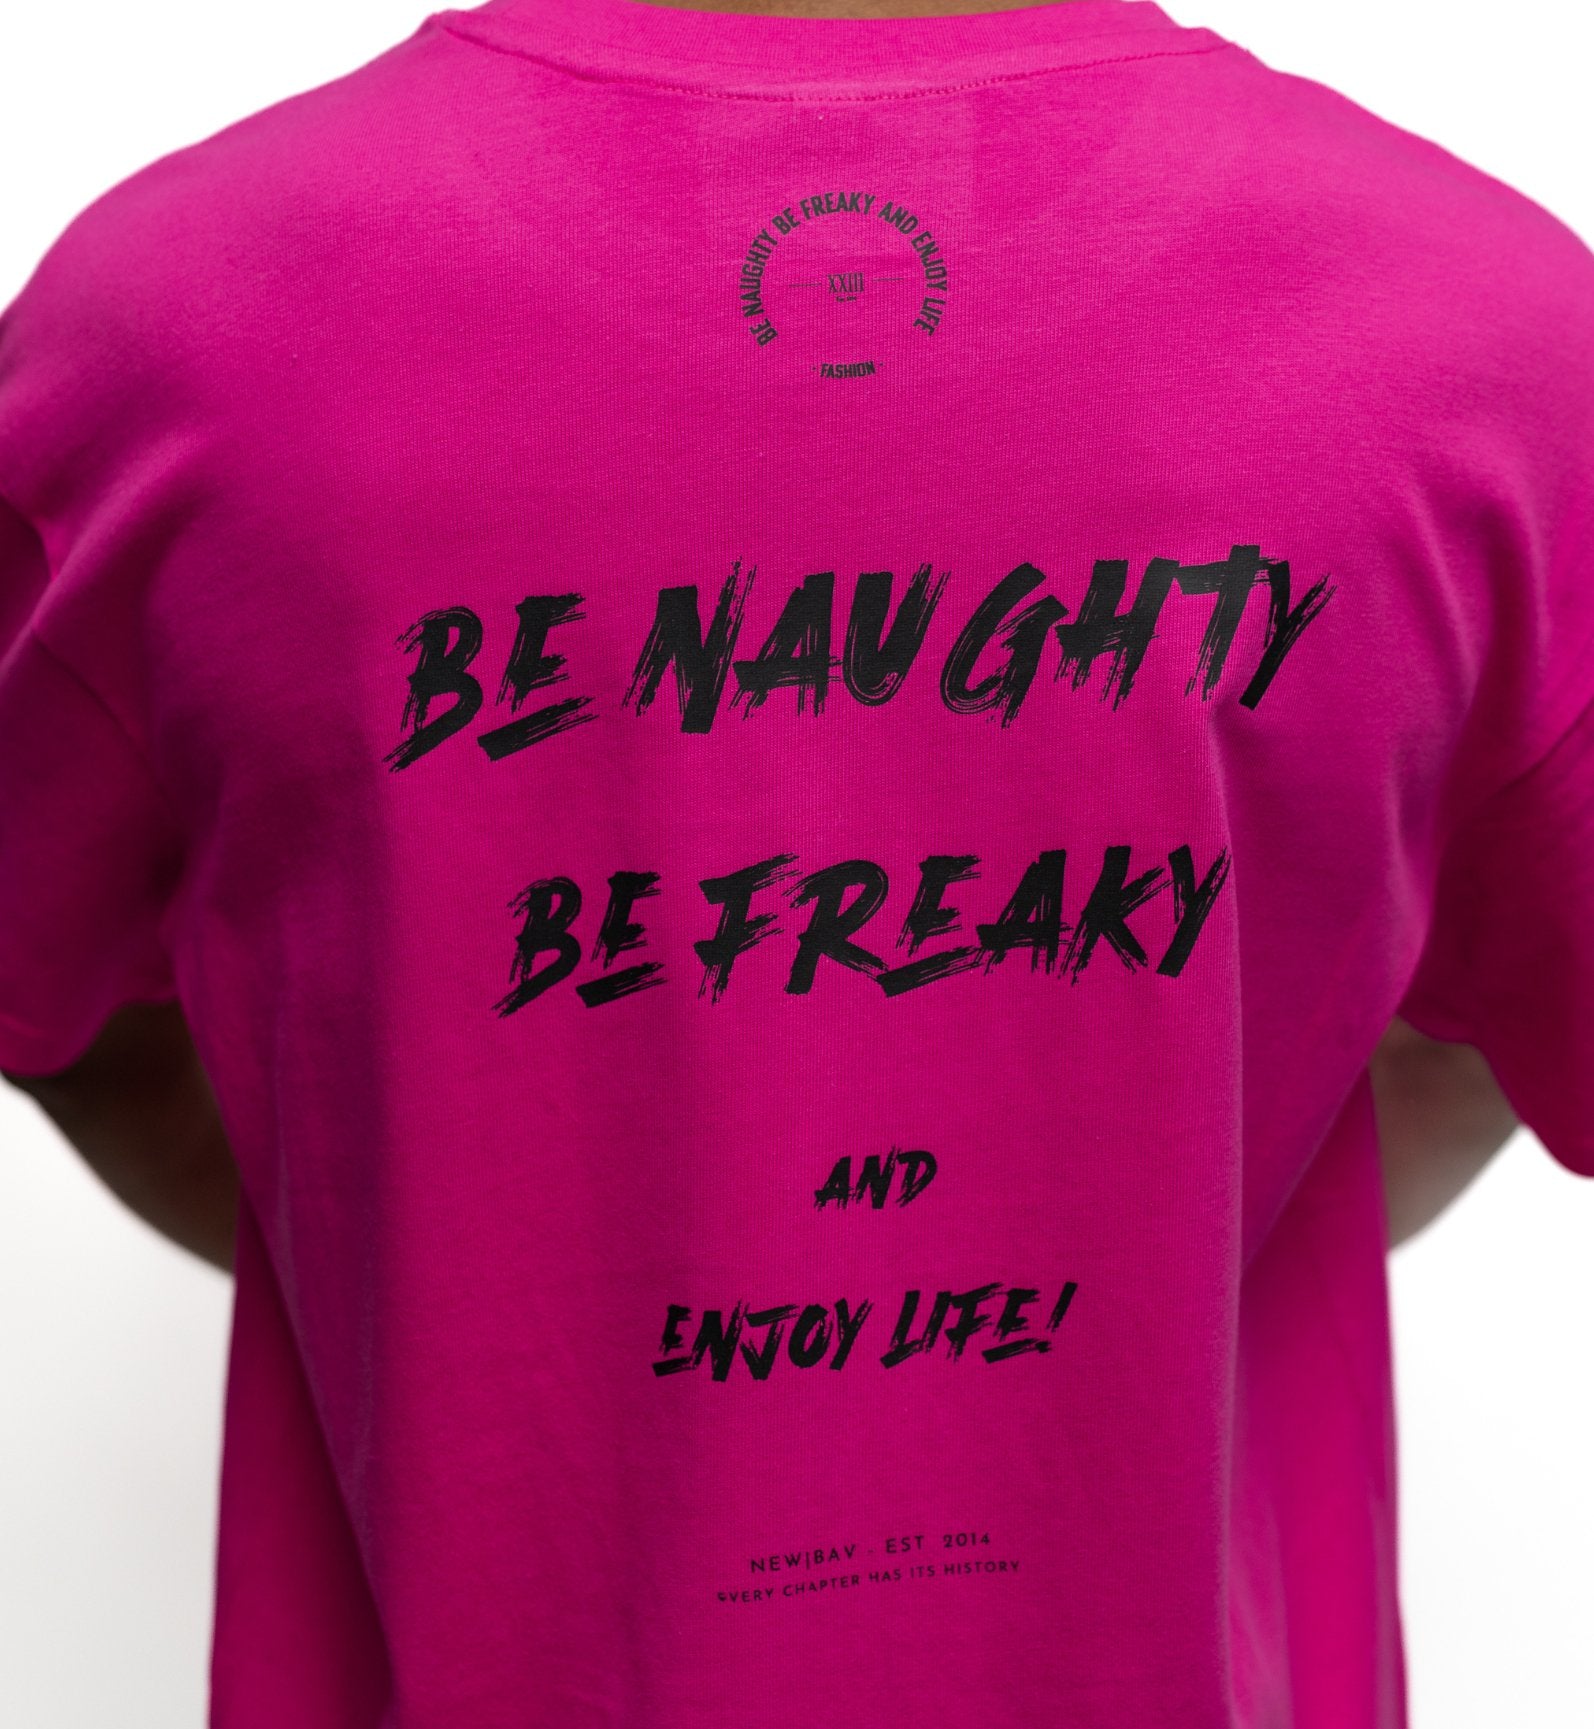 NB Diego Oversize Shirt Pink 240gsm - new-bav